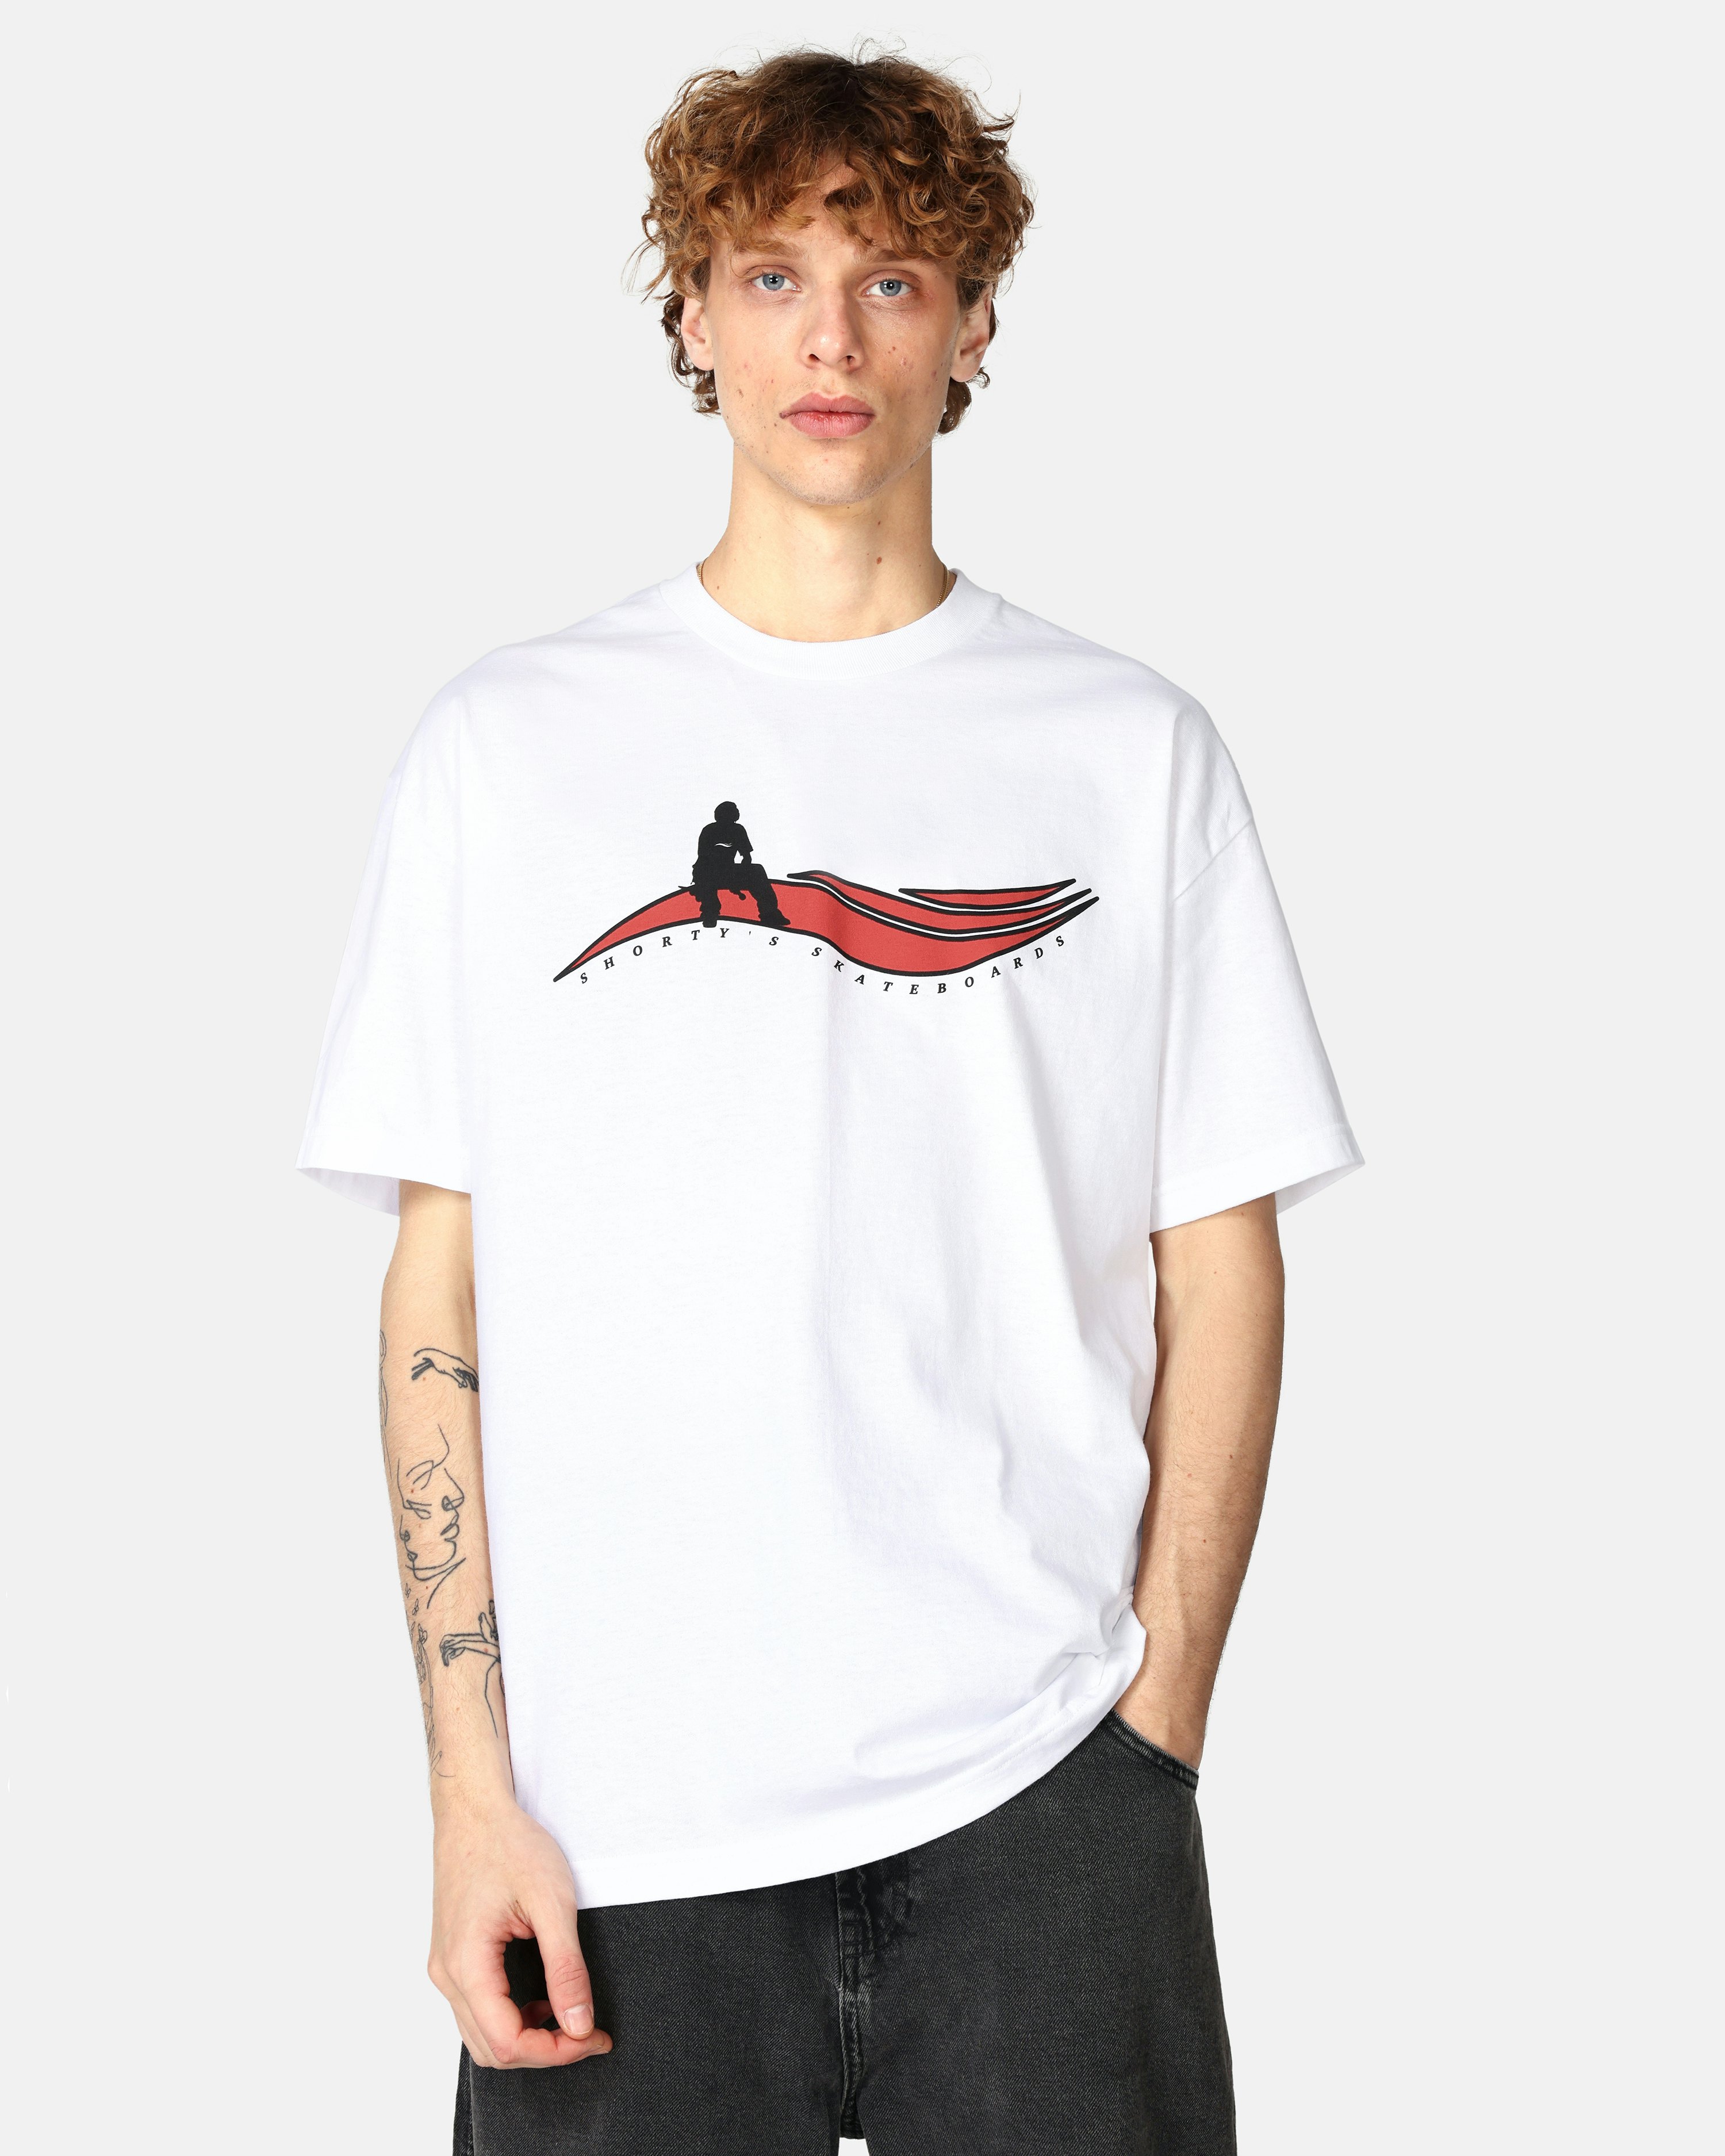 Shorty's T-Shirt - Muska Wave Logo White | Men | Junkyard